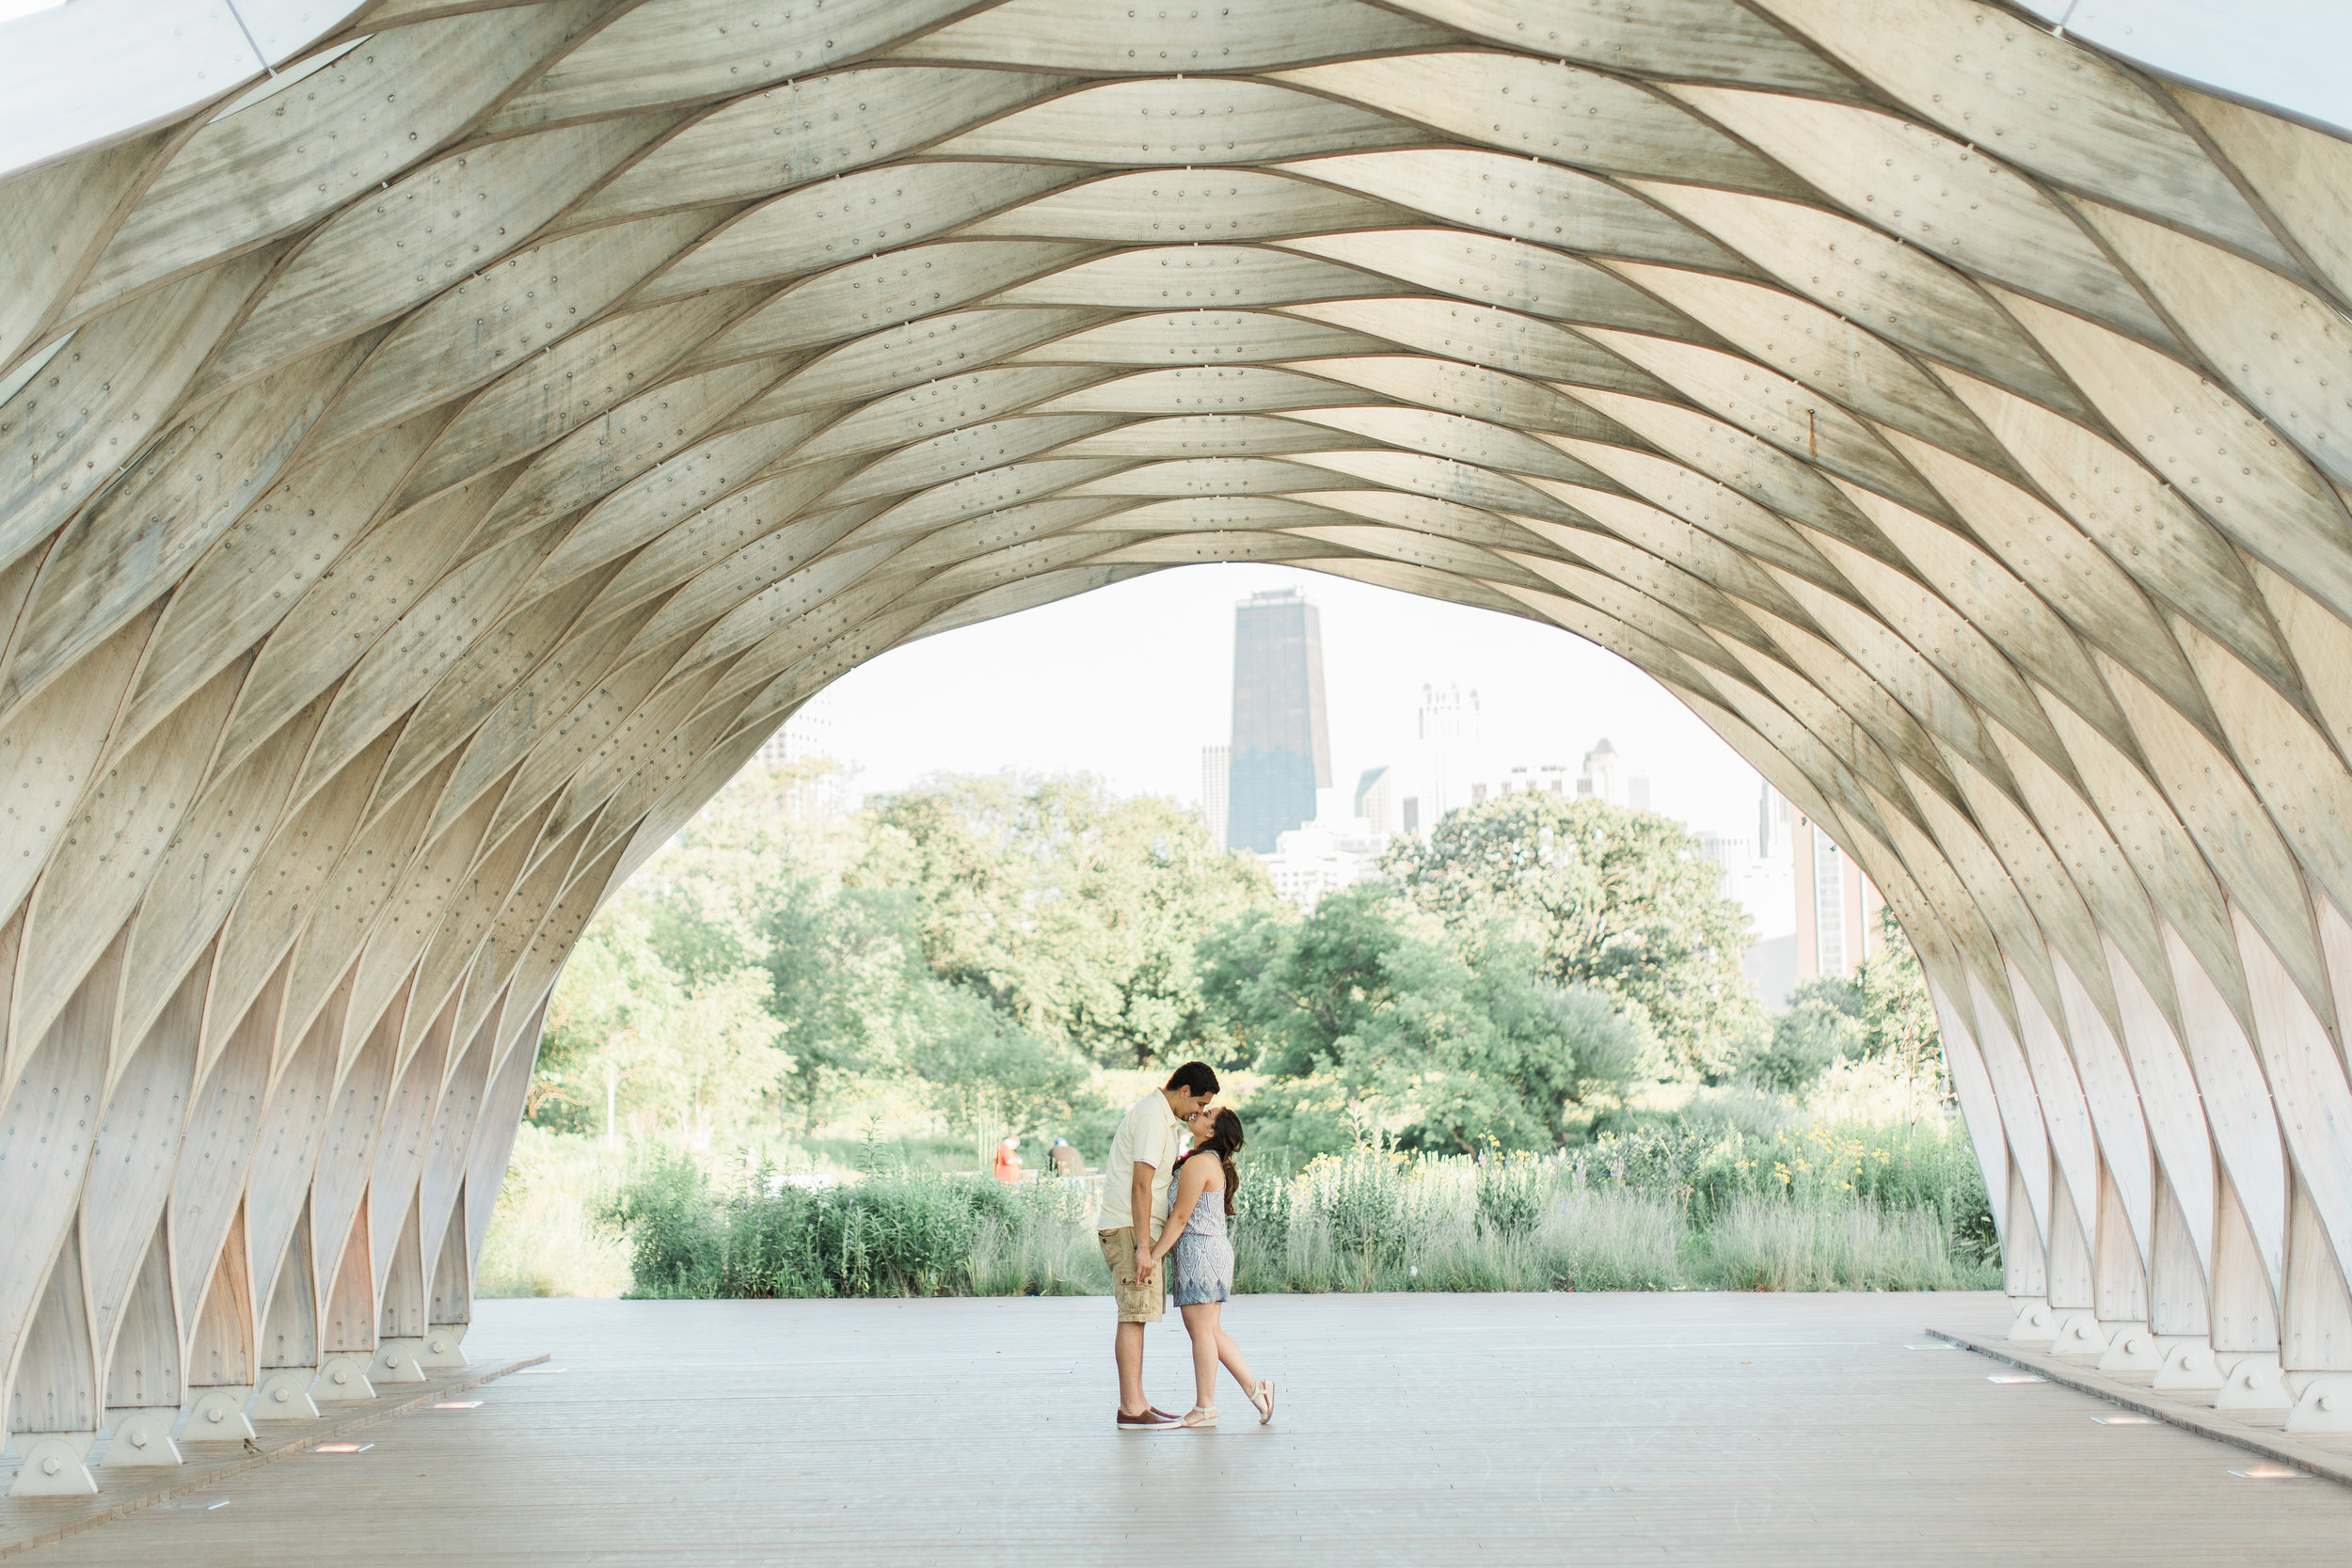 Edgar & Jocelyn — Chicago Nature Boardwalk proposal